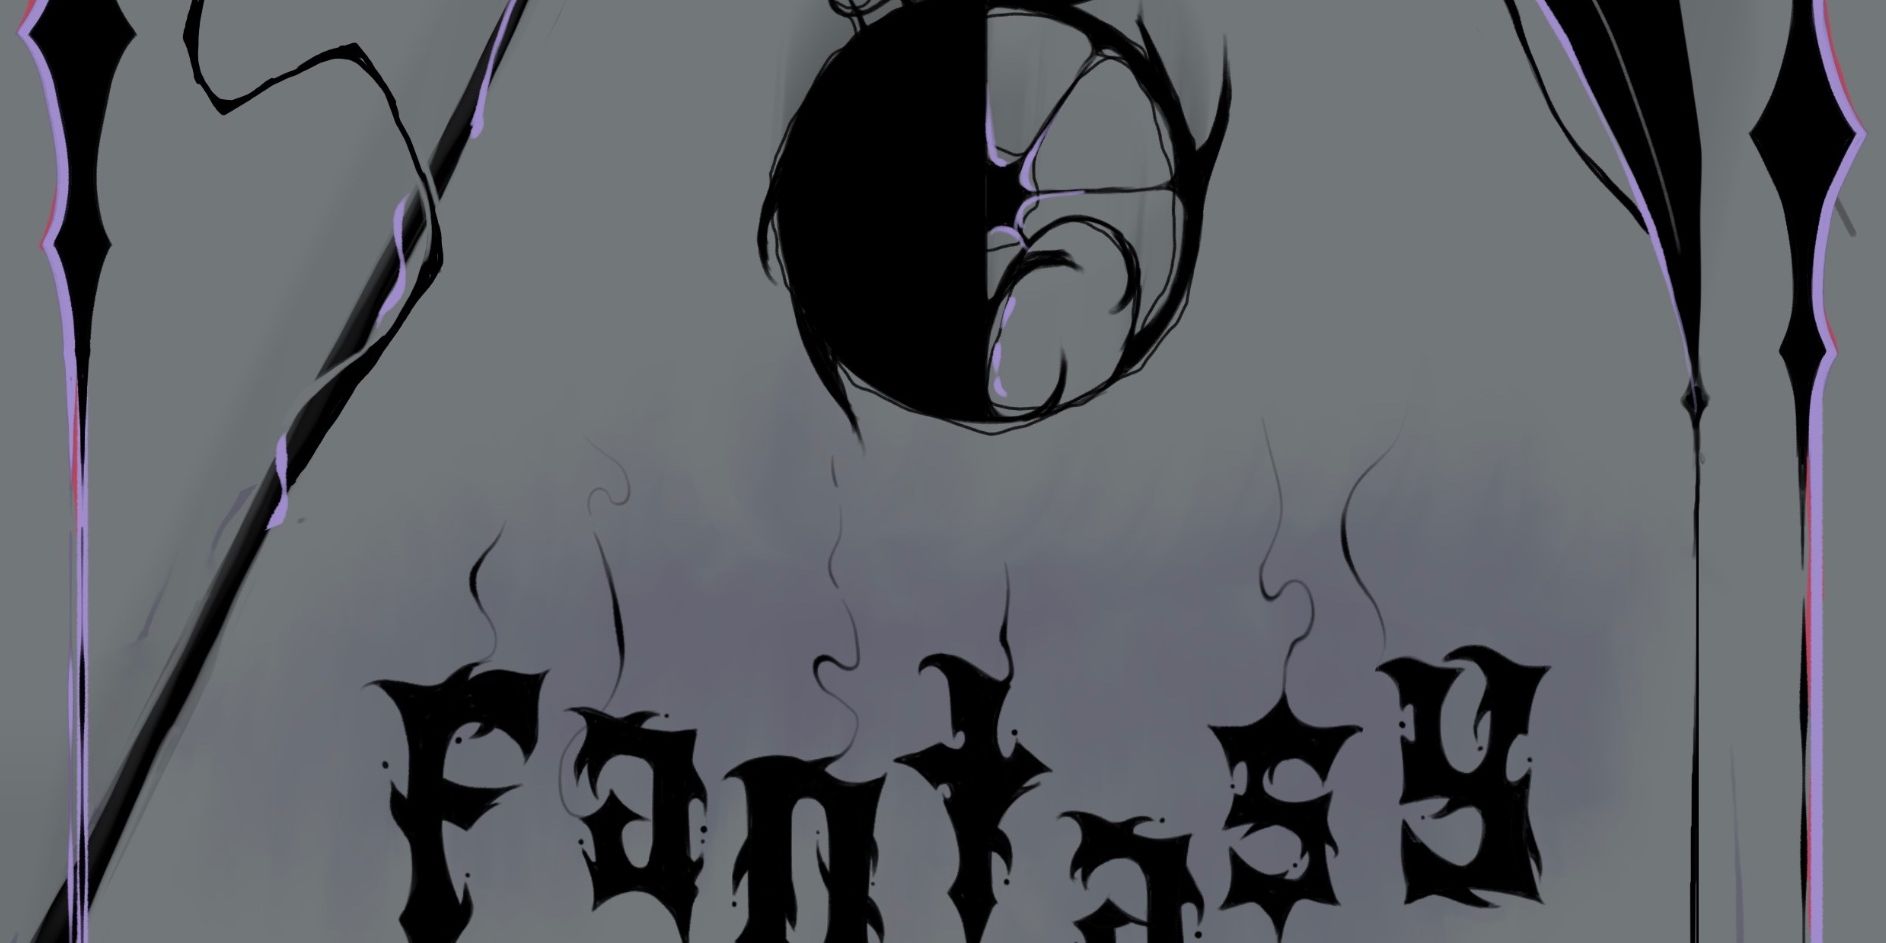 The word 'Fantasy' written in black on a grey background below Bulletin logo